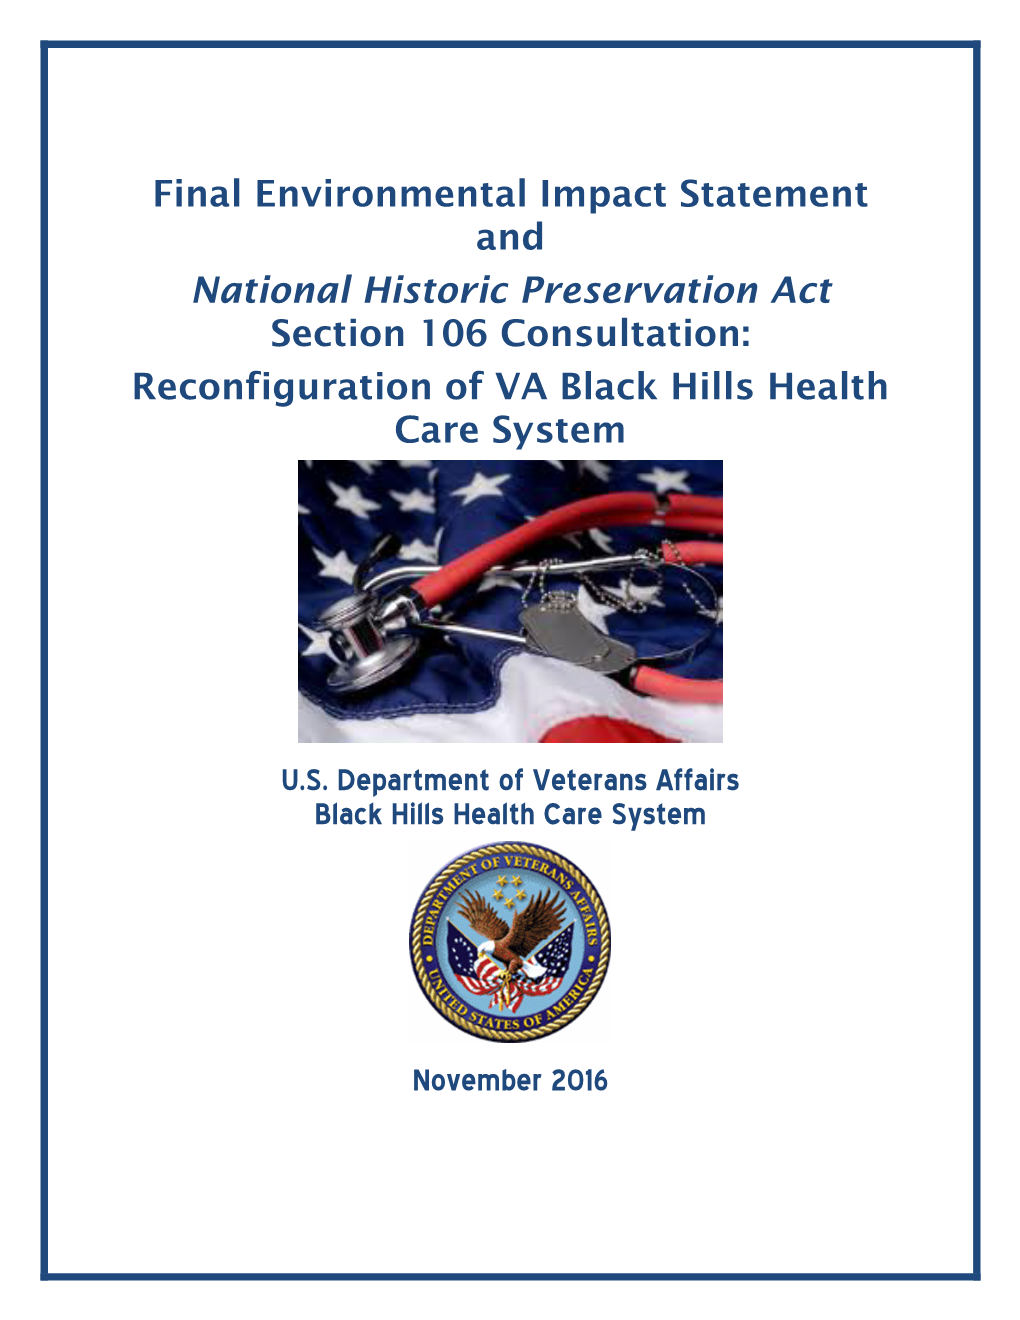 Final Environmental Impact Statement Appendix